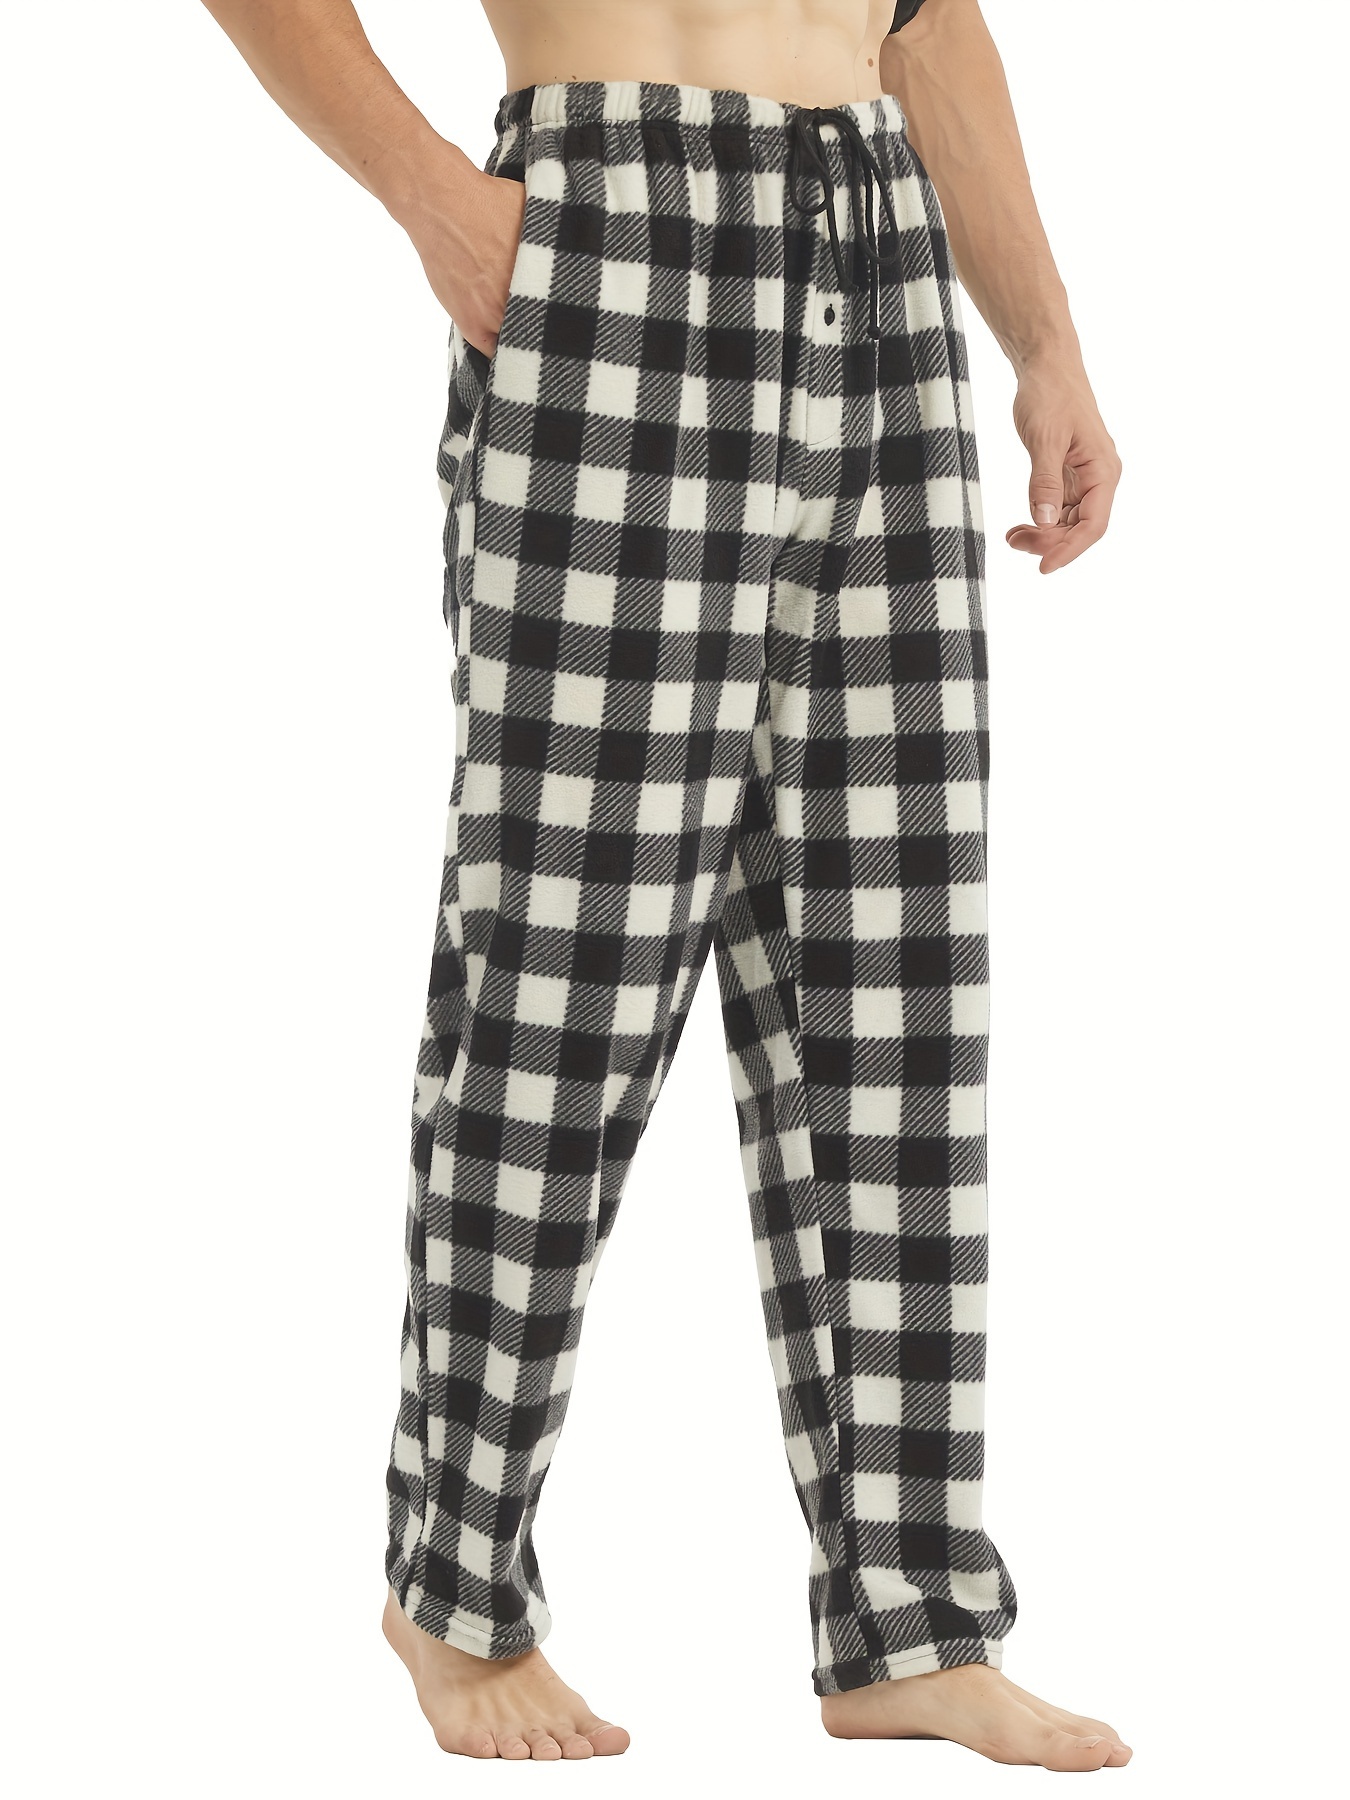 Pantalones Gruesos Cordón Cuadros Hombre Ropa Pijama Gruesas